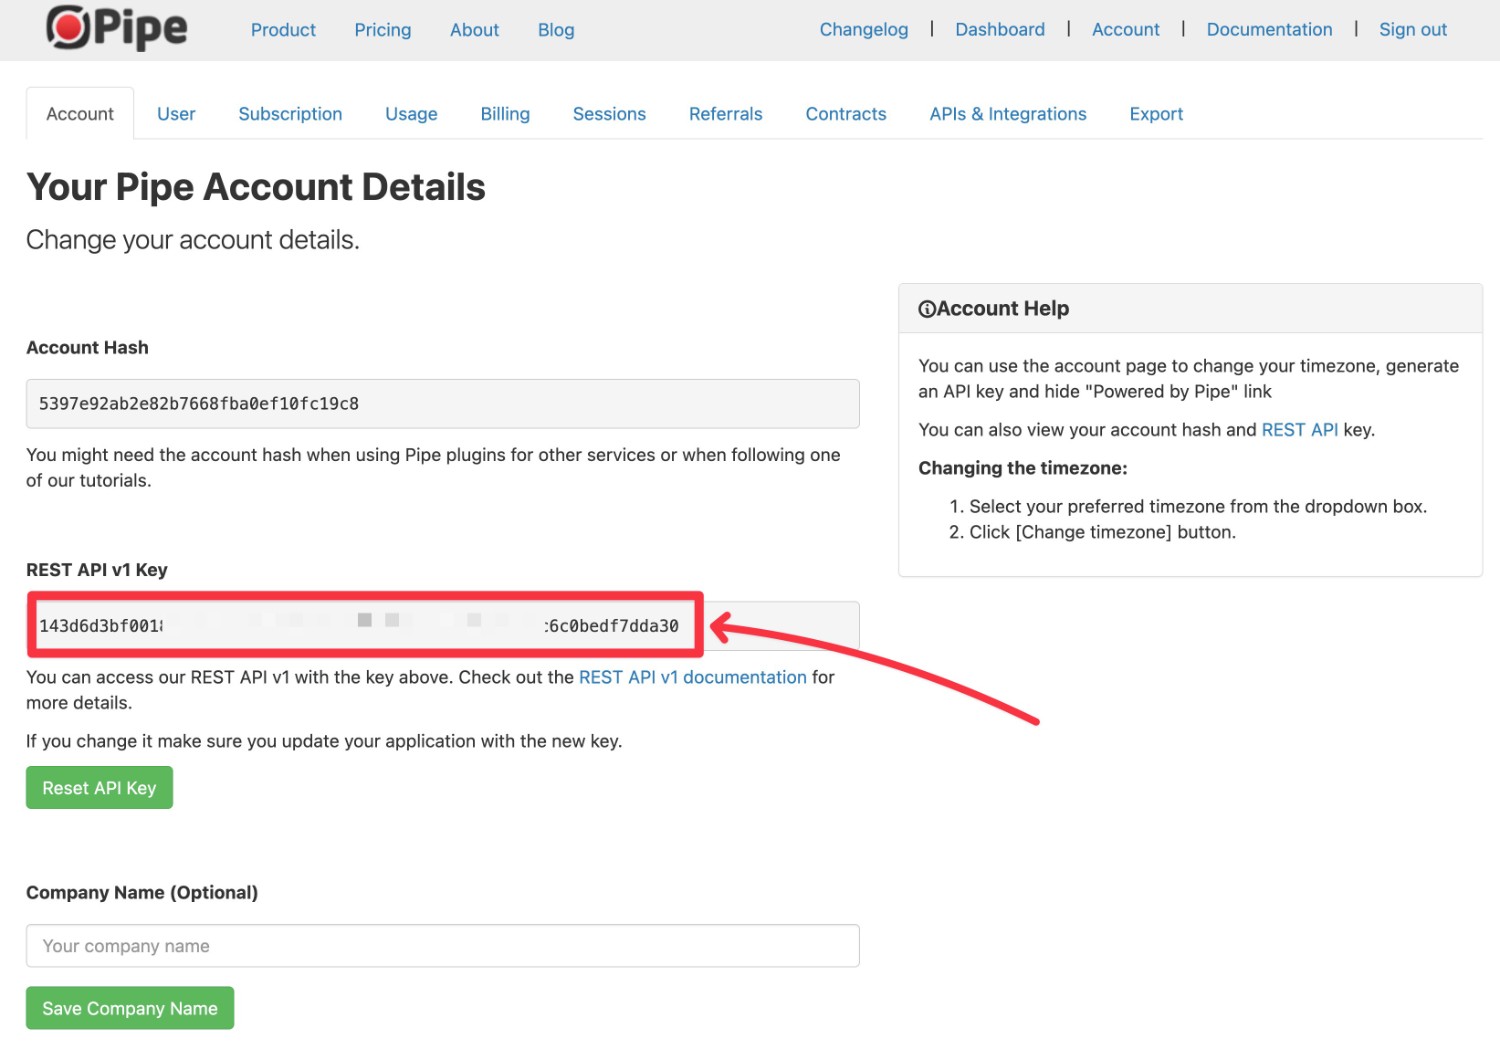 How to access the account API key